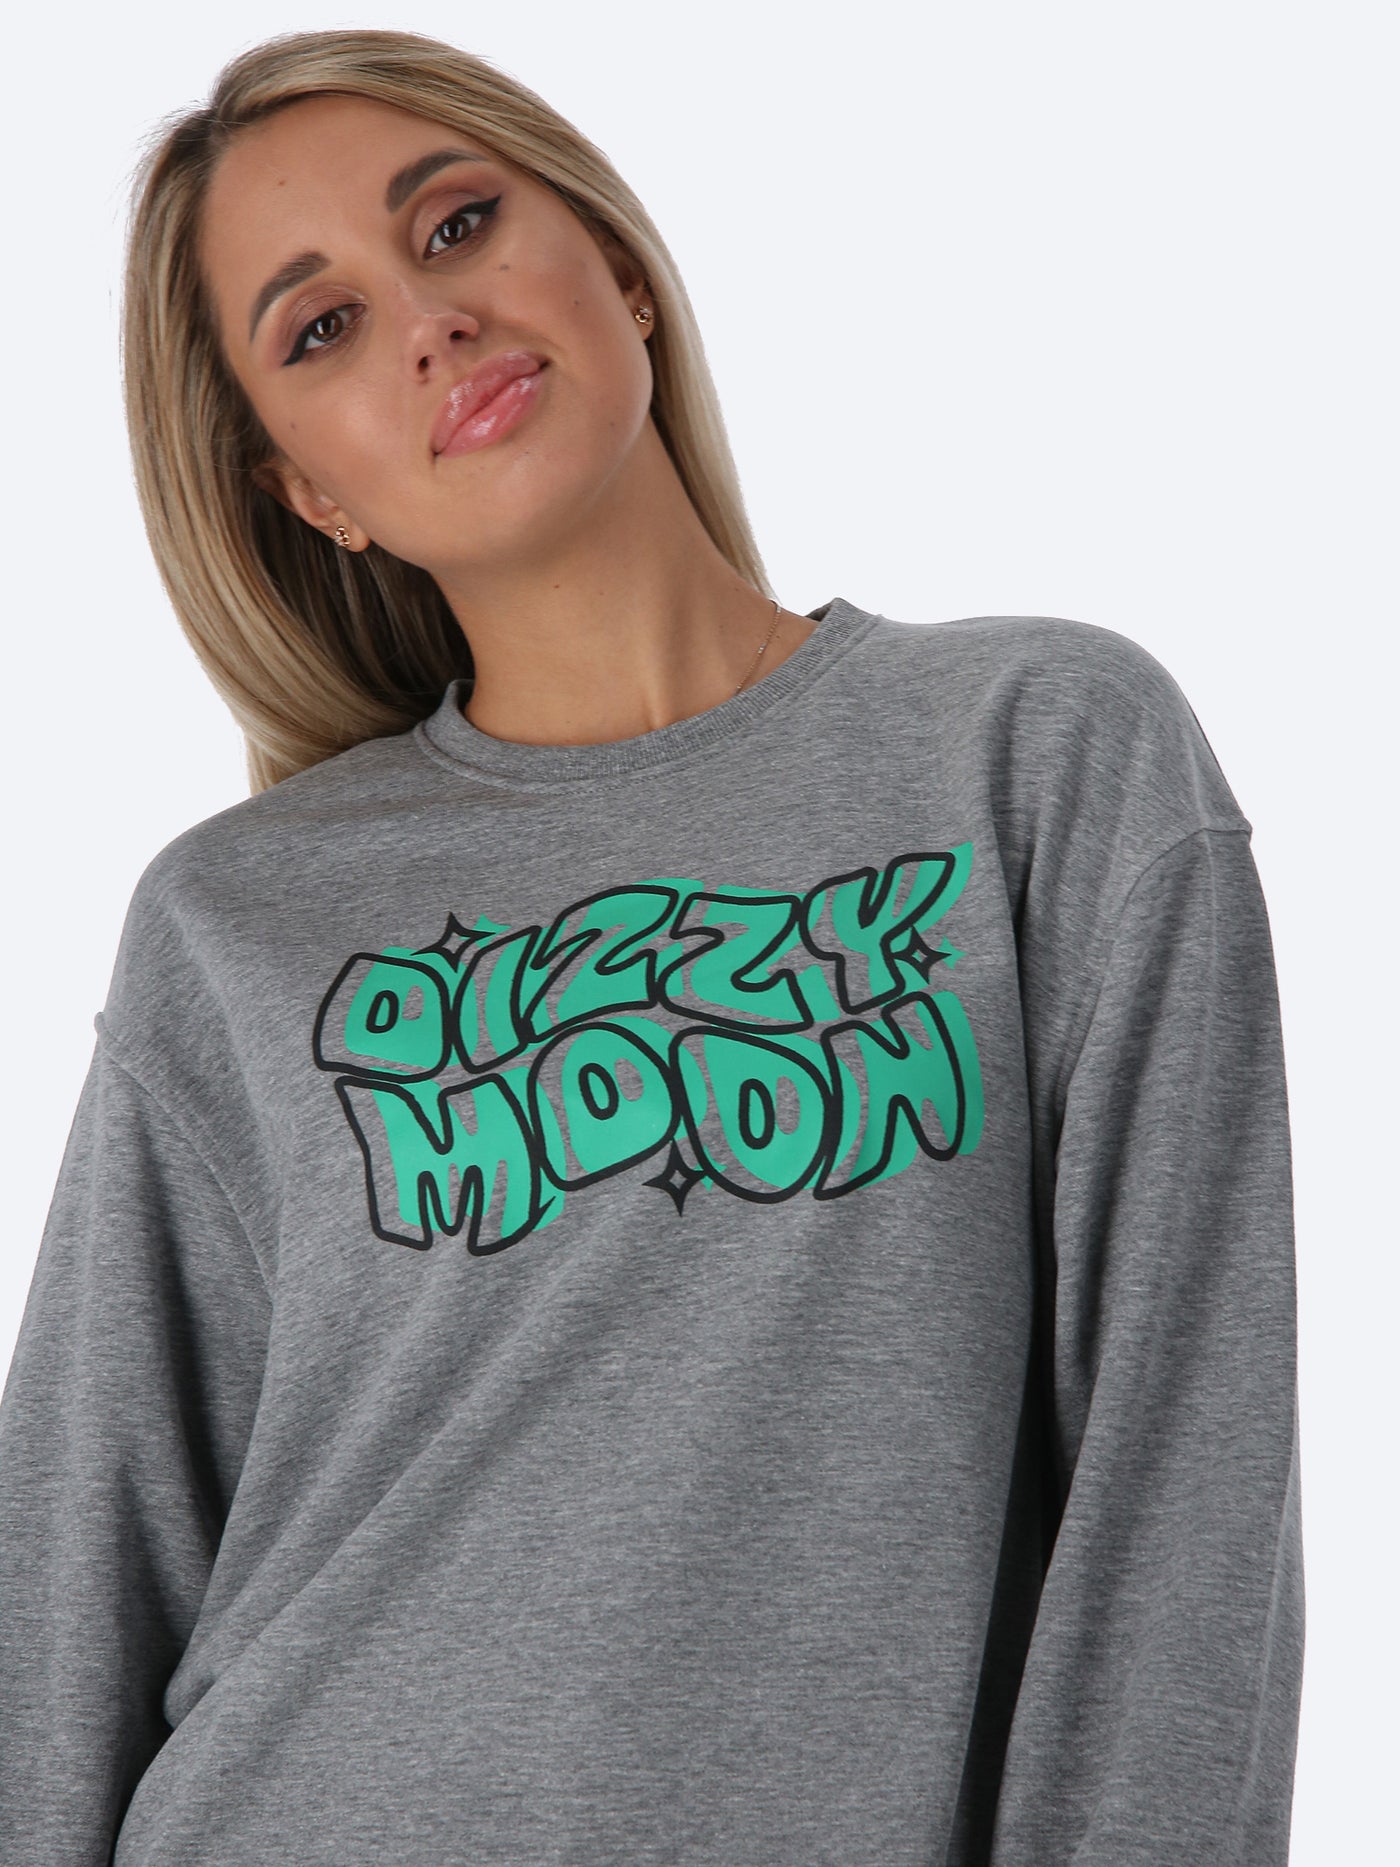 Sweatshirt - "Dizzy Moon" - Round Neck